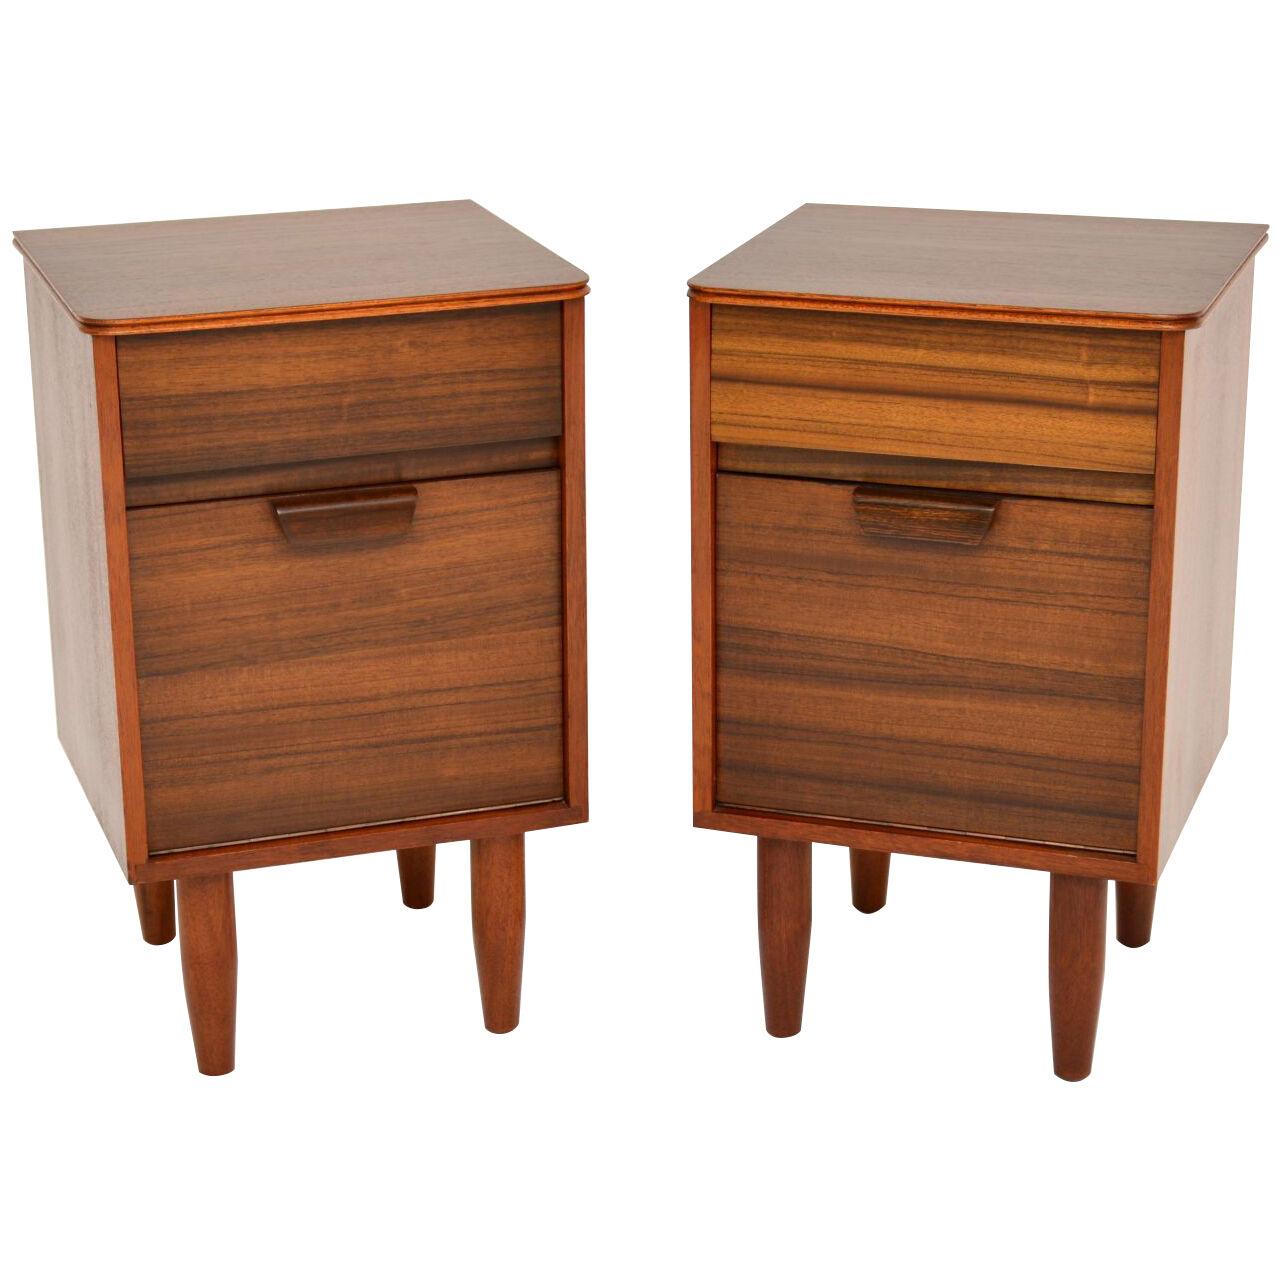 1960's Pair of Vintage Walnut Bedside Cabinets by Uniflex